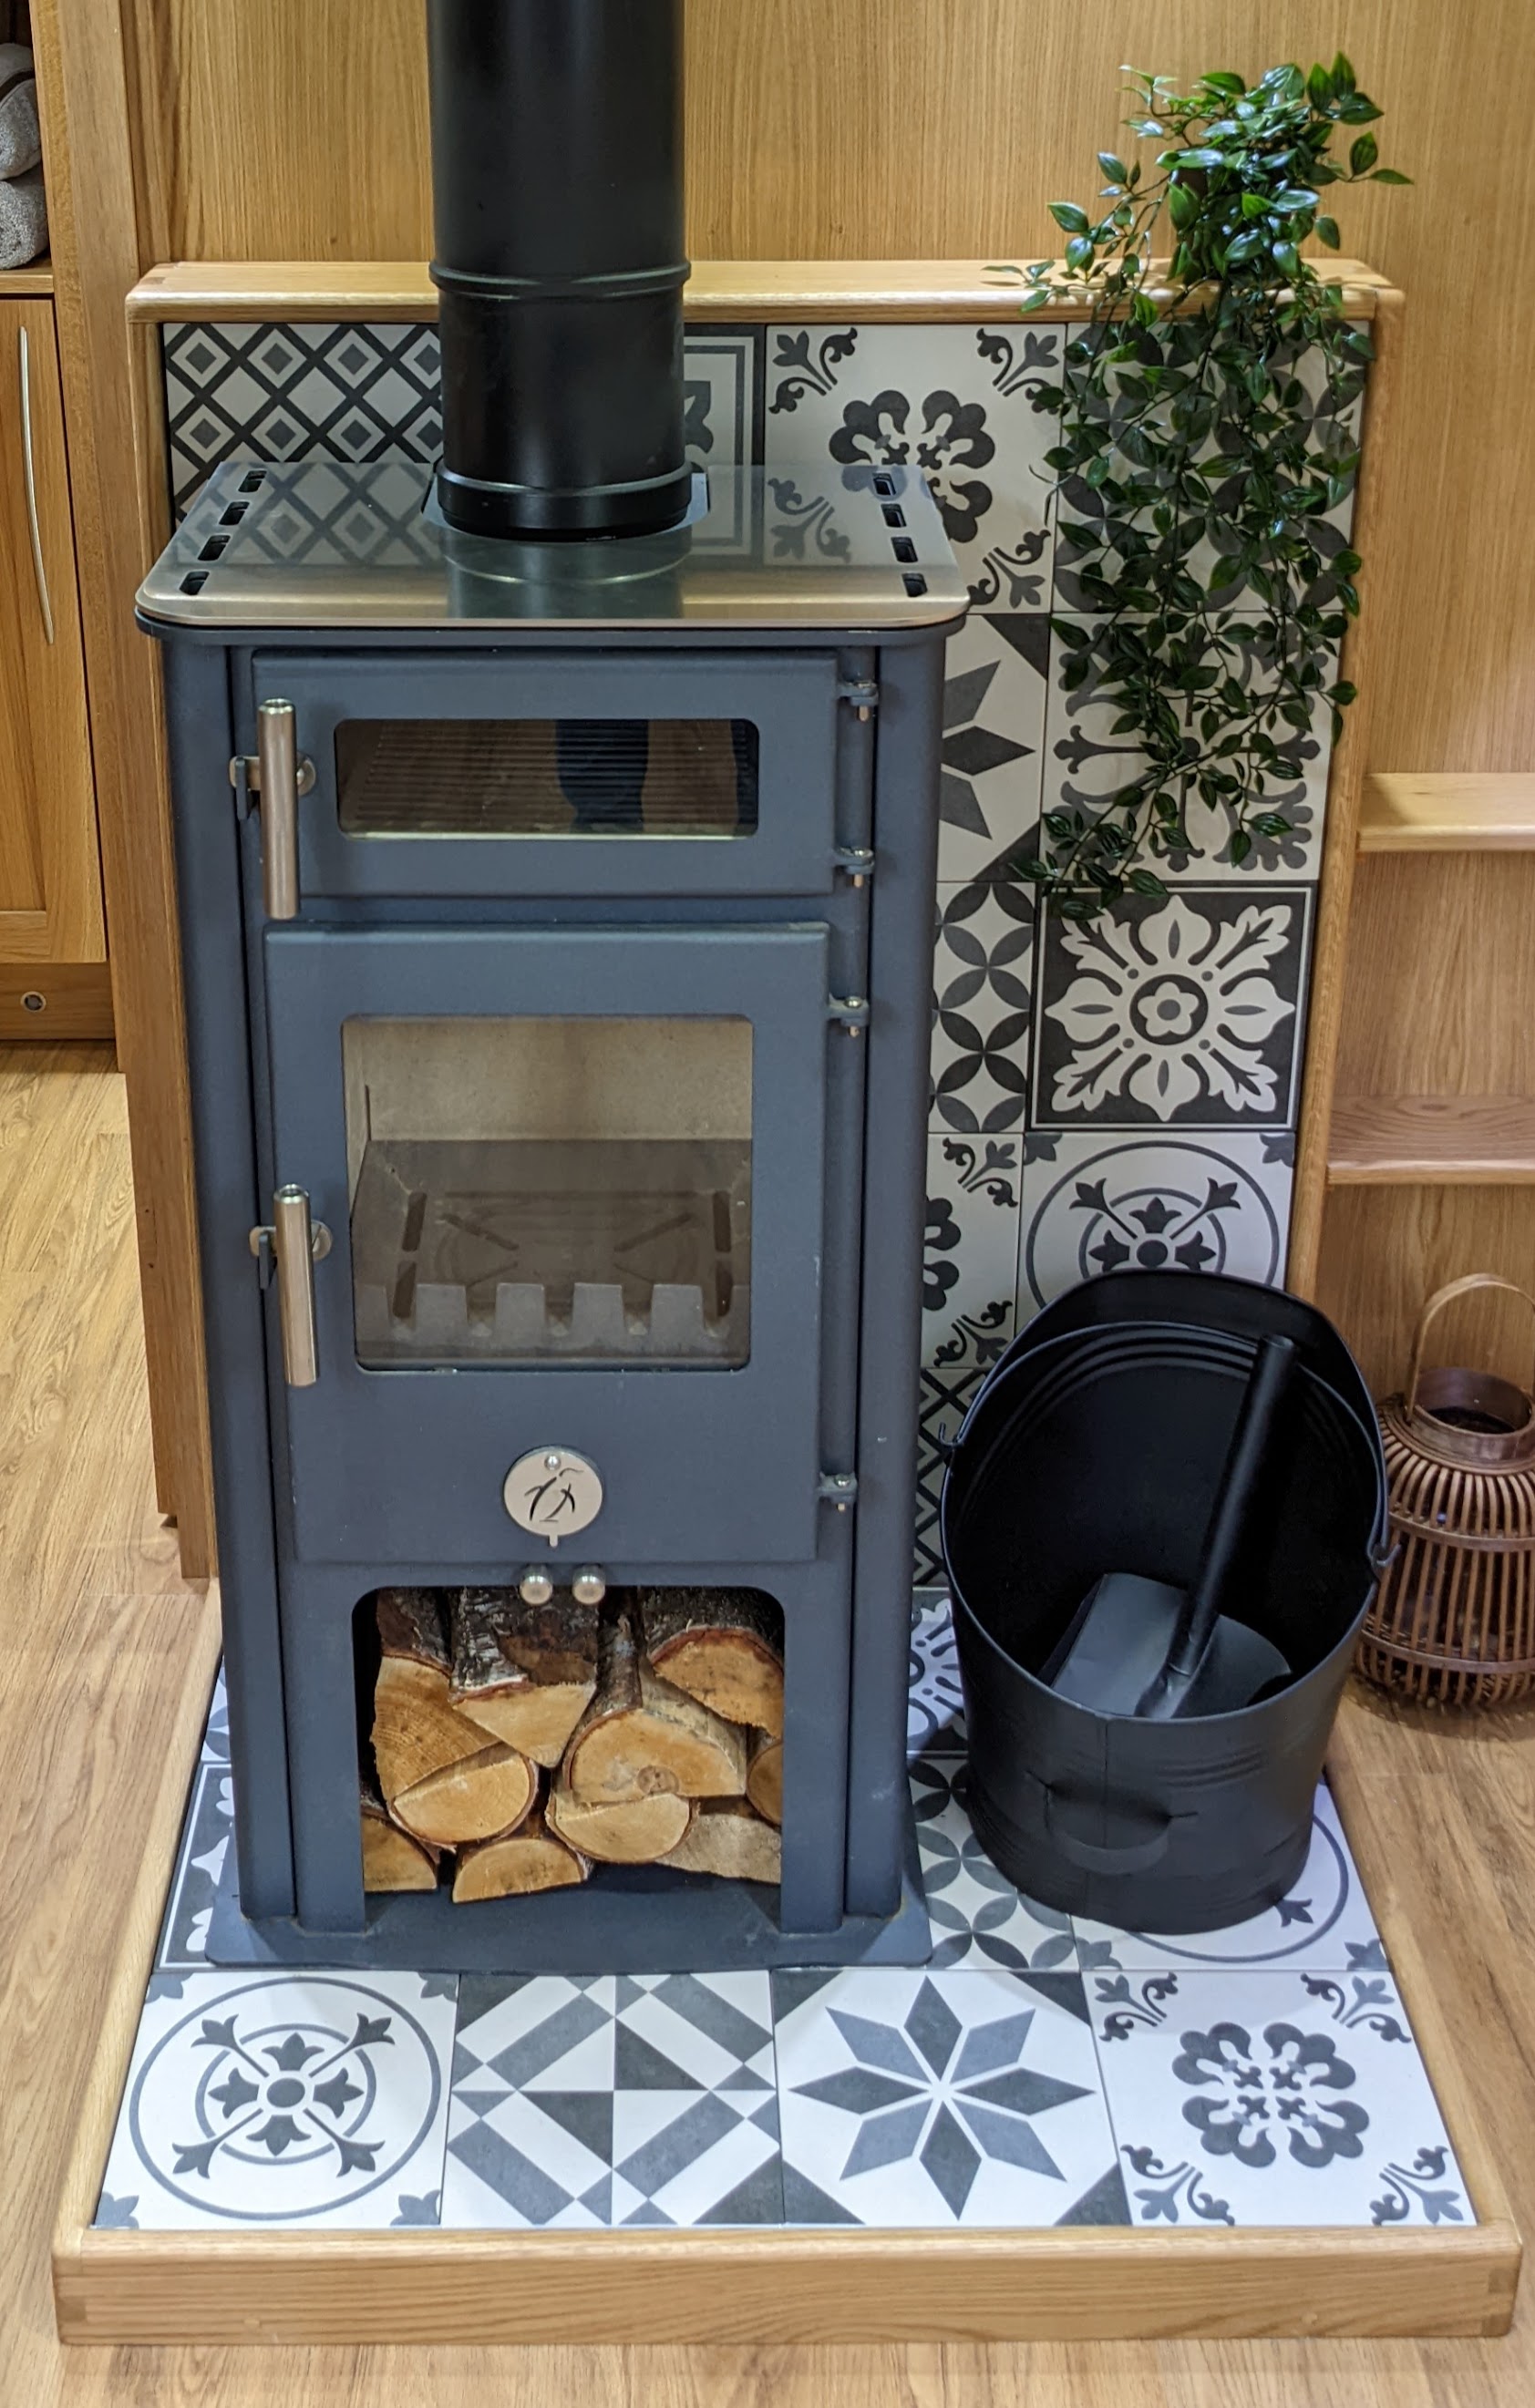 The Chilli Penguin stove I saw at Crick Boat Show